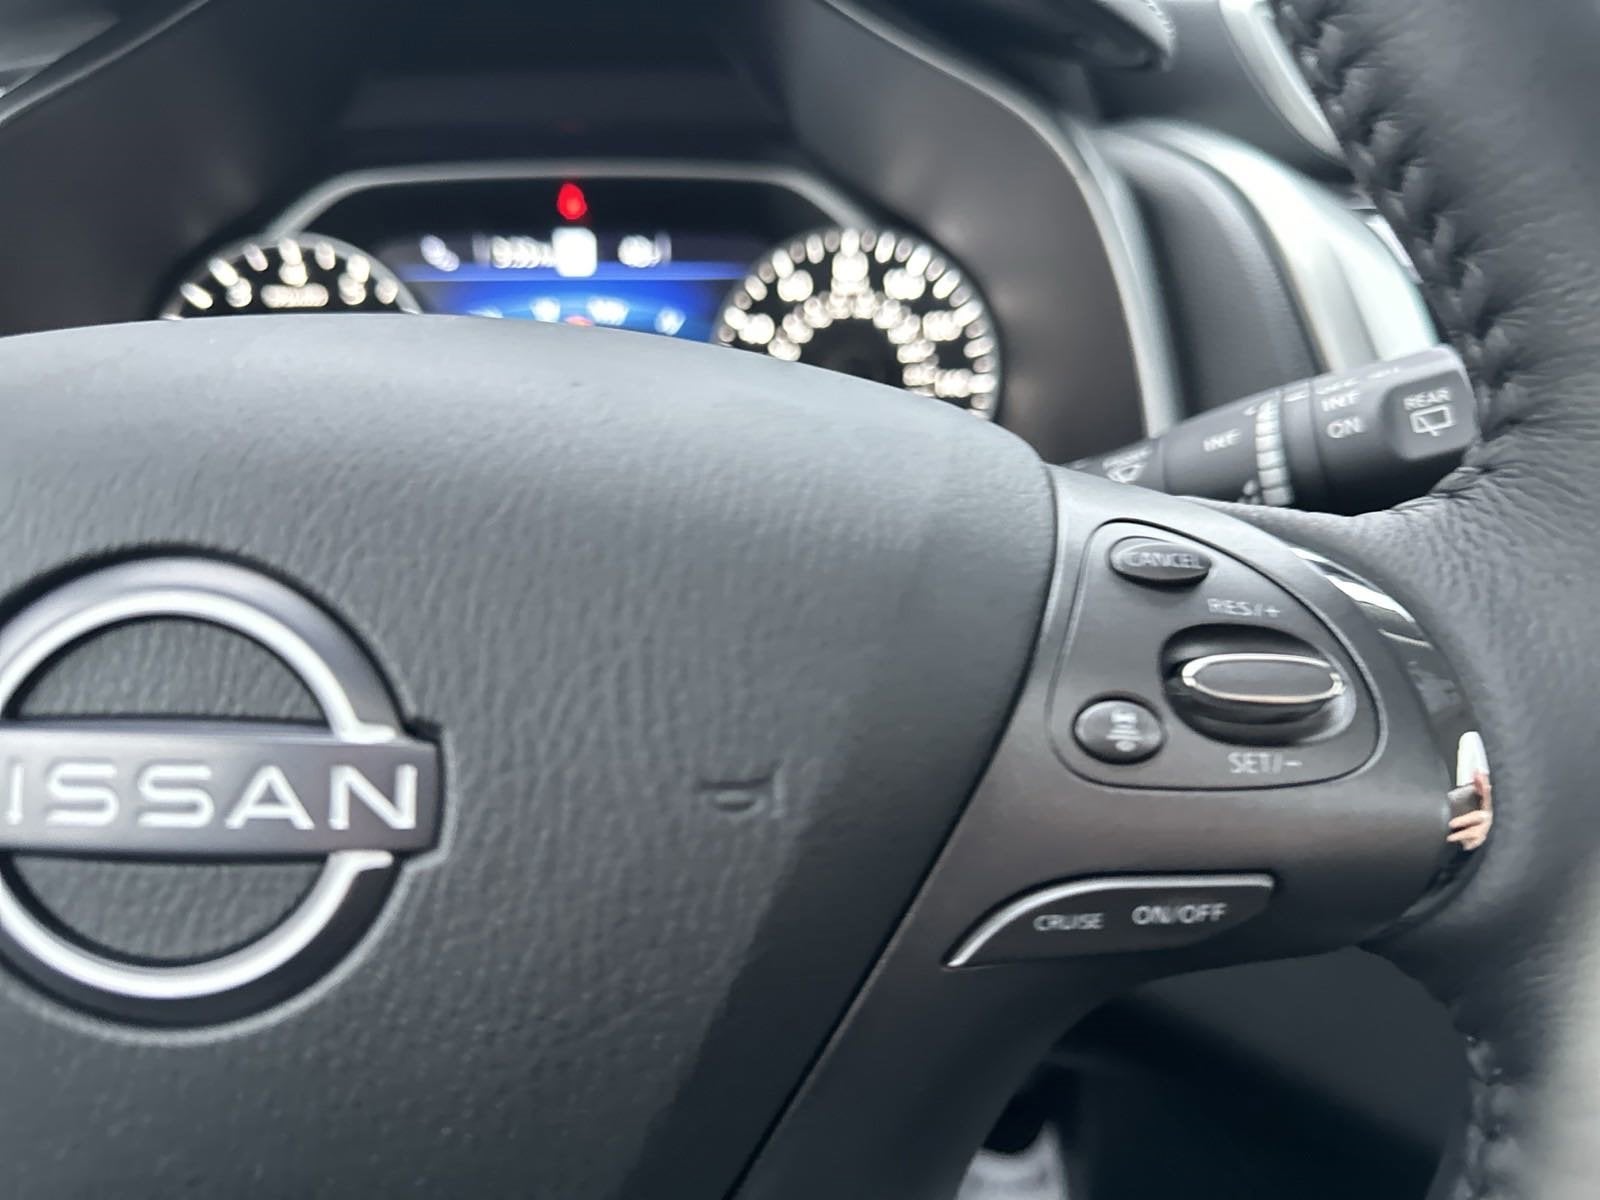 2024 Nissan Murano SL